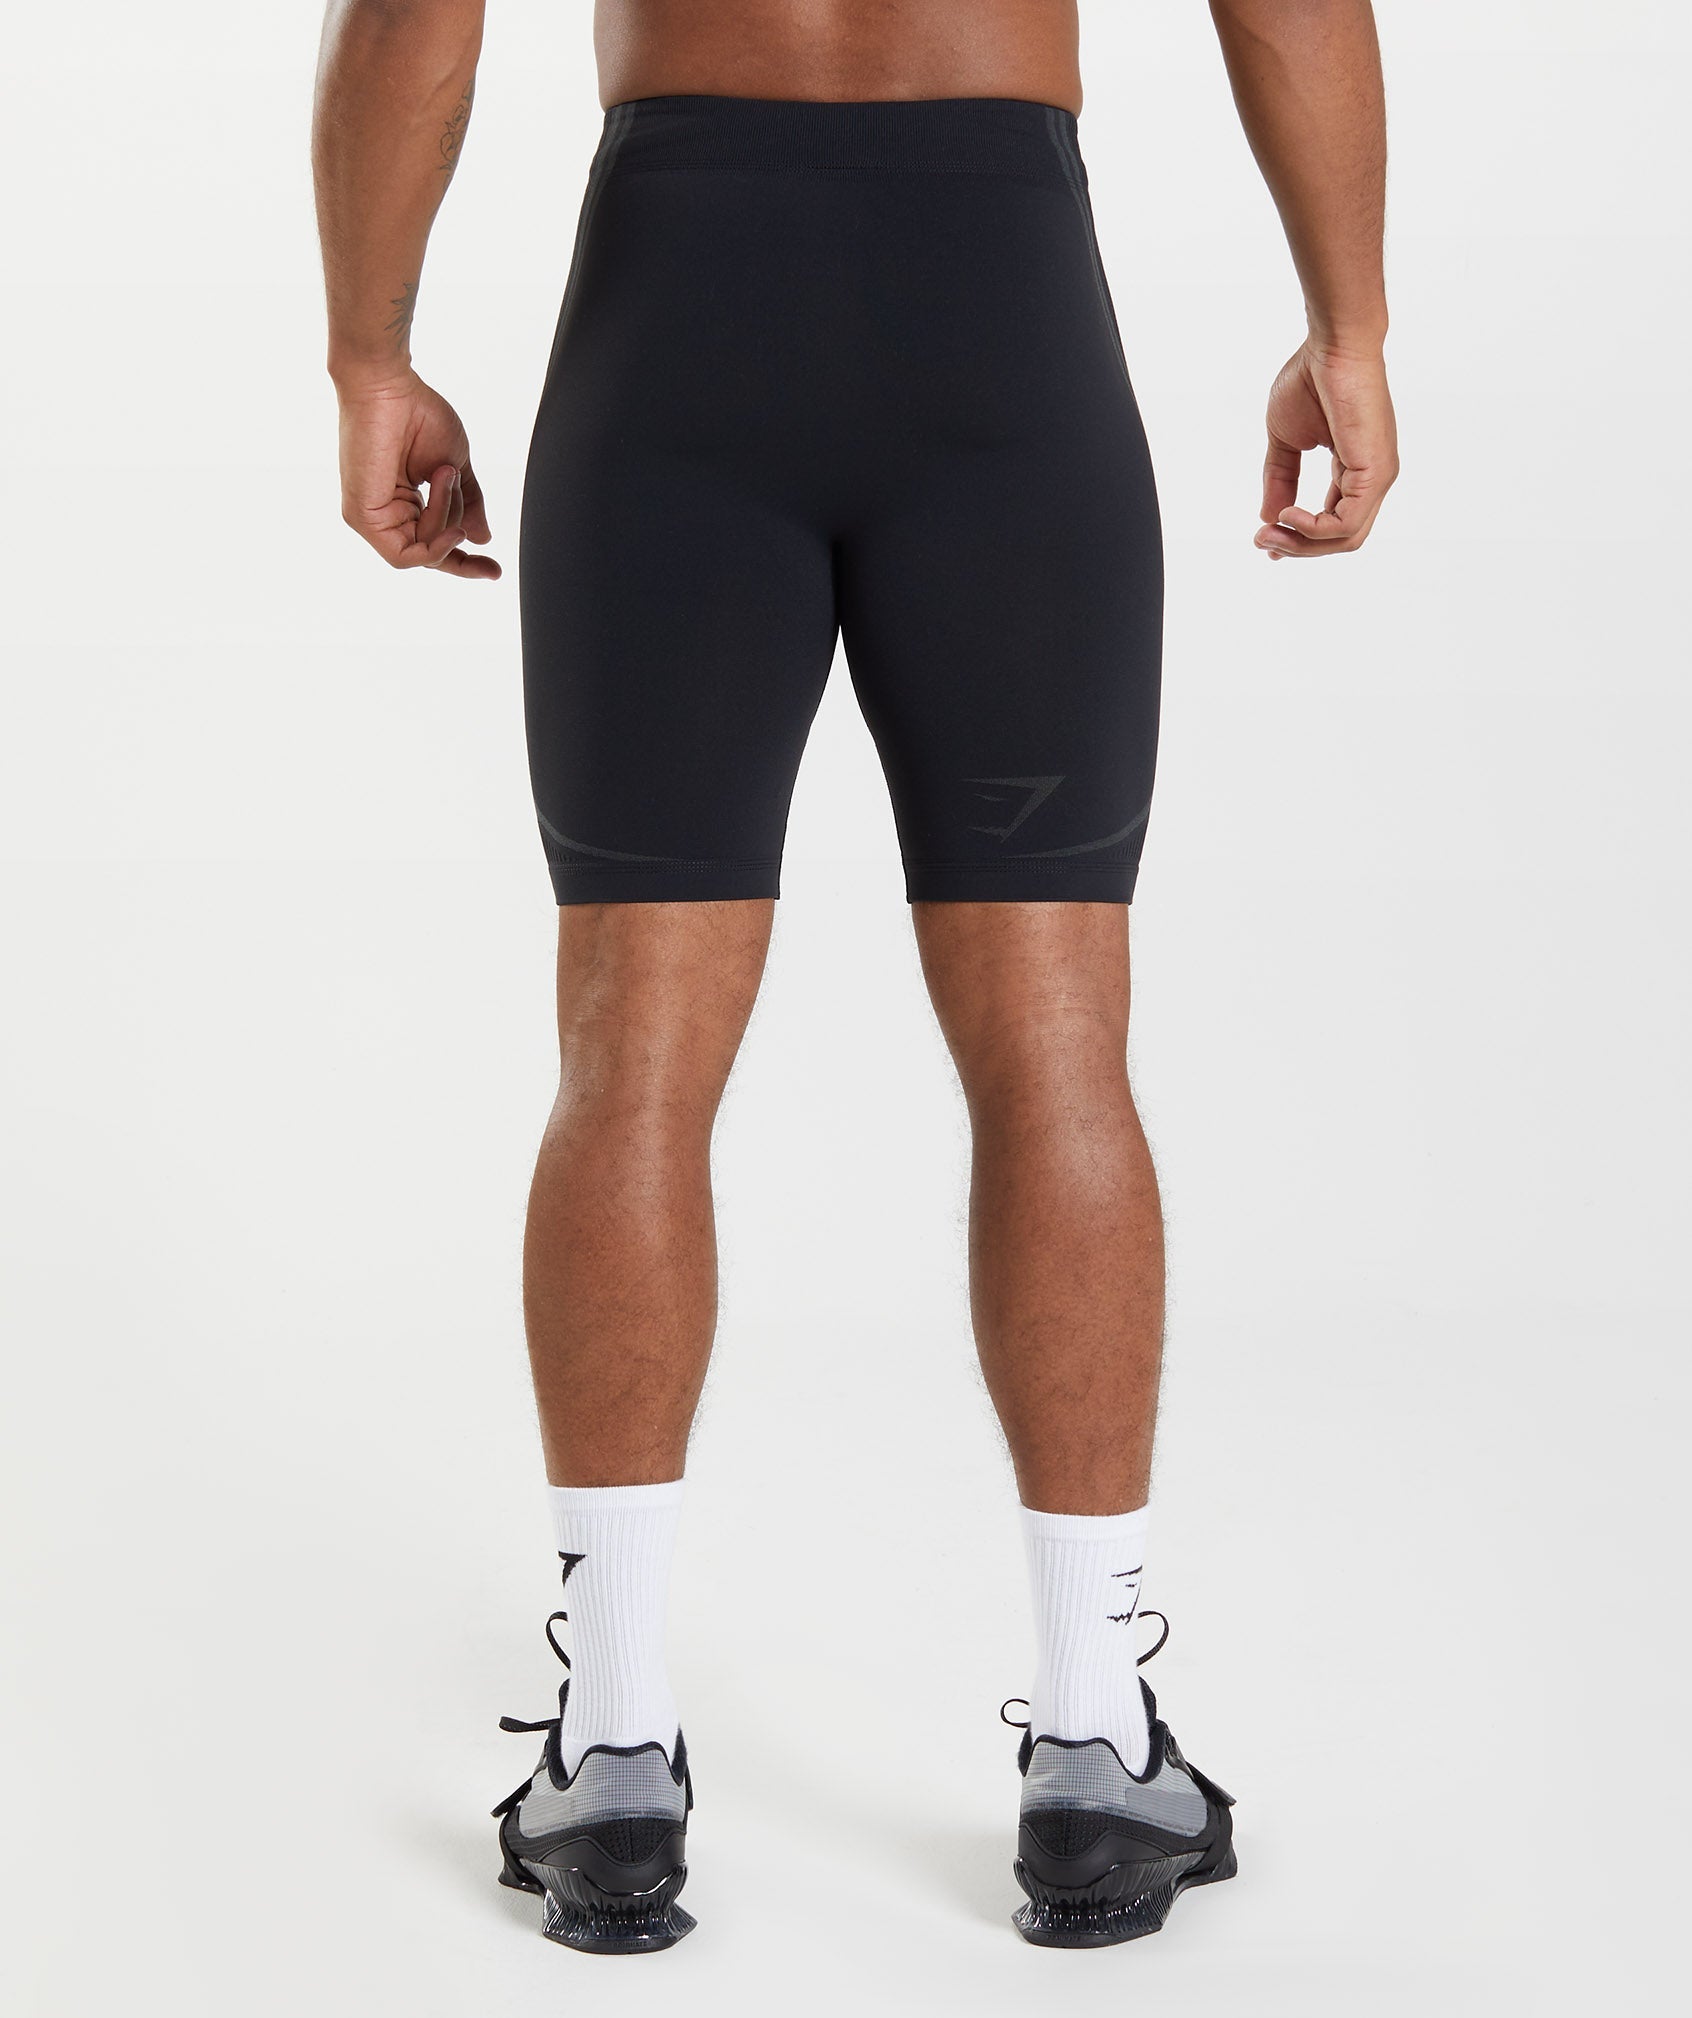 Gymshark 315 Seamless 1/2 Shorts - Black/Charcoal Grey | Gymshark